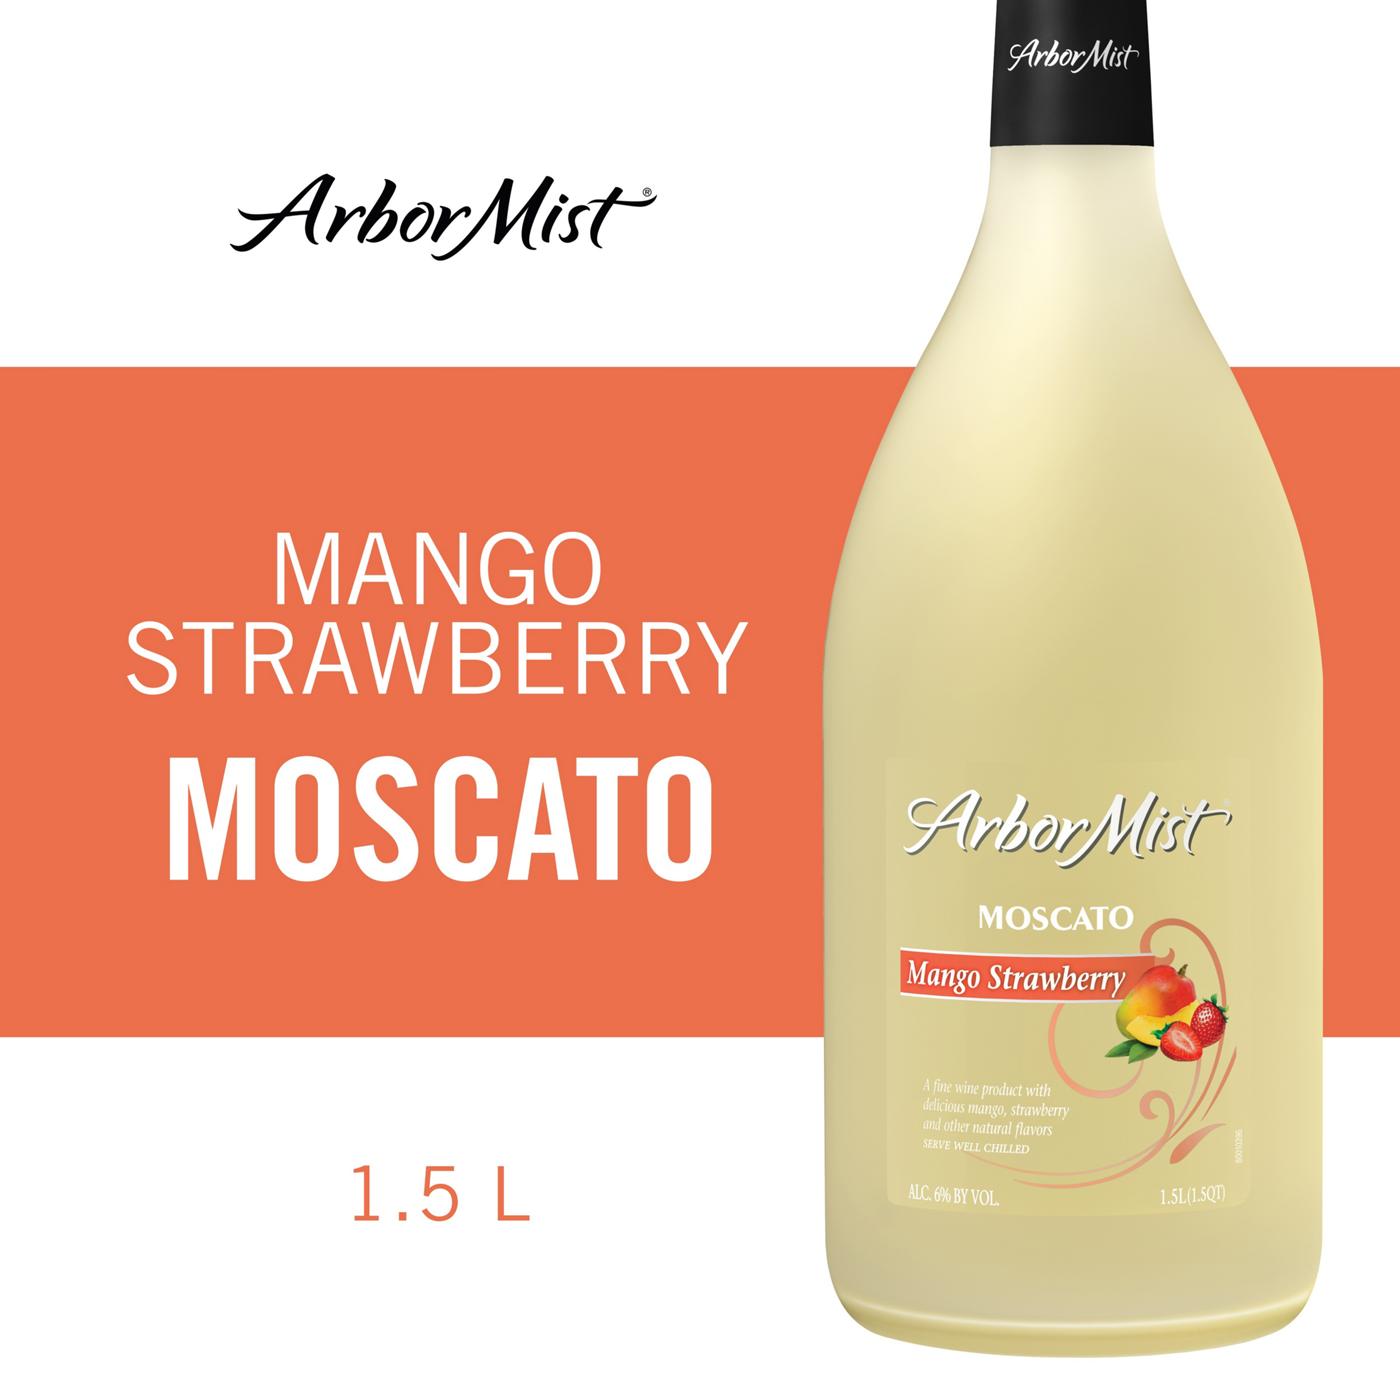 Arbor Mist Mango Strawberry Moscato Wine; image 3 of 5